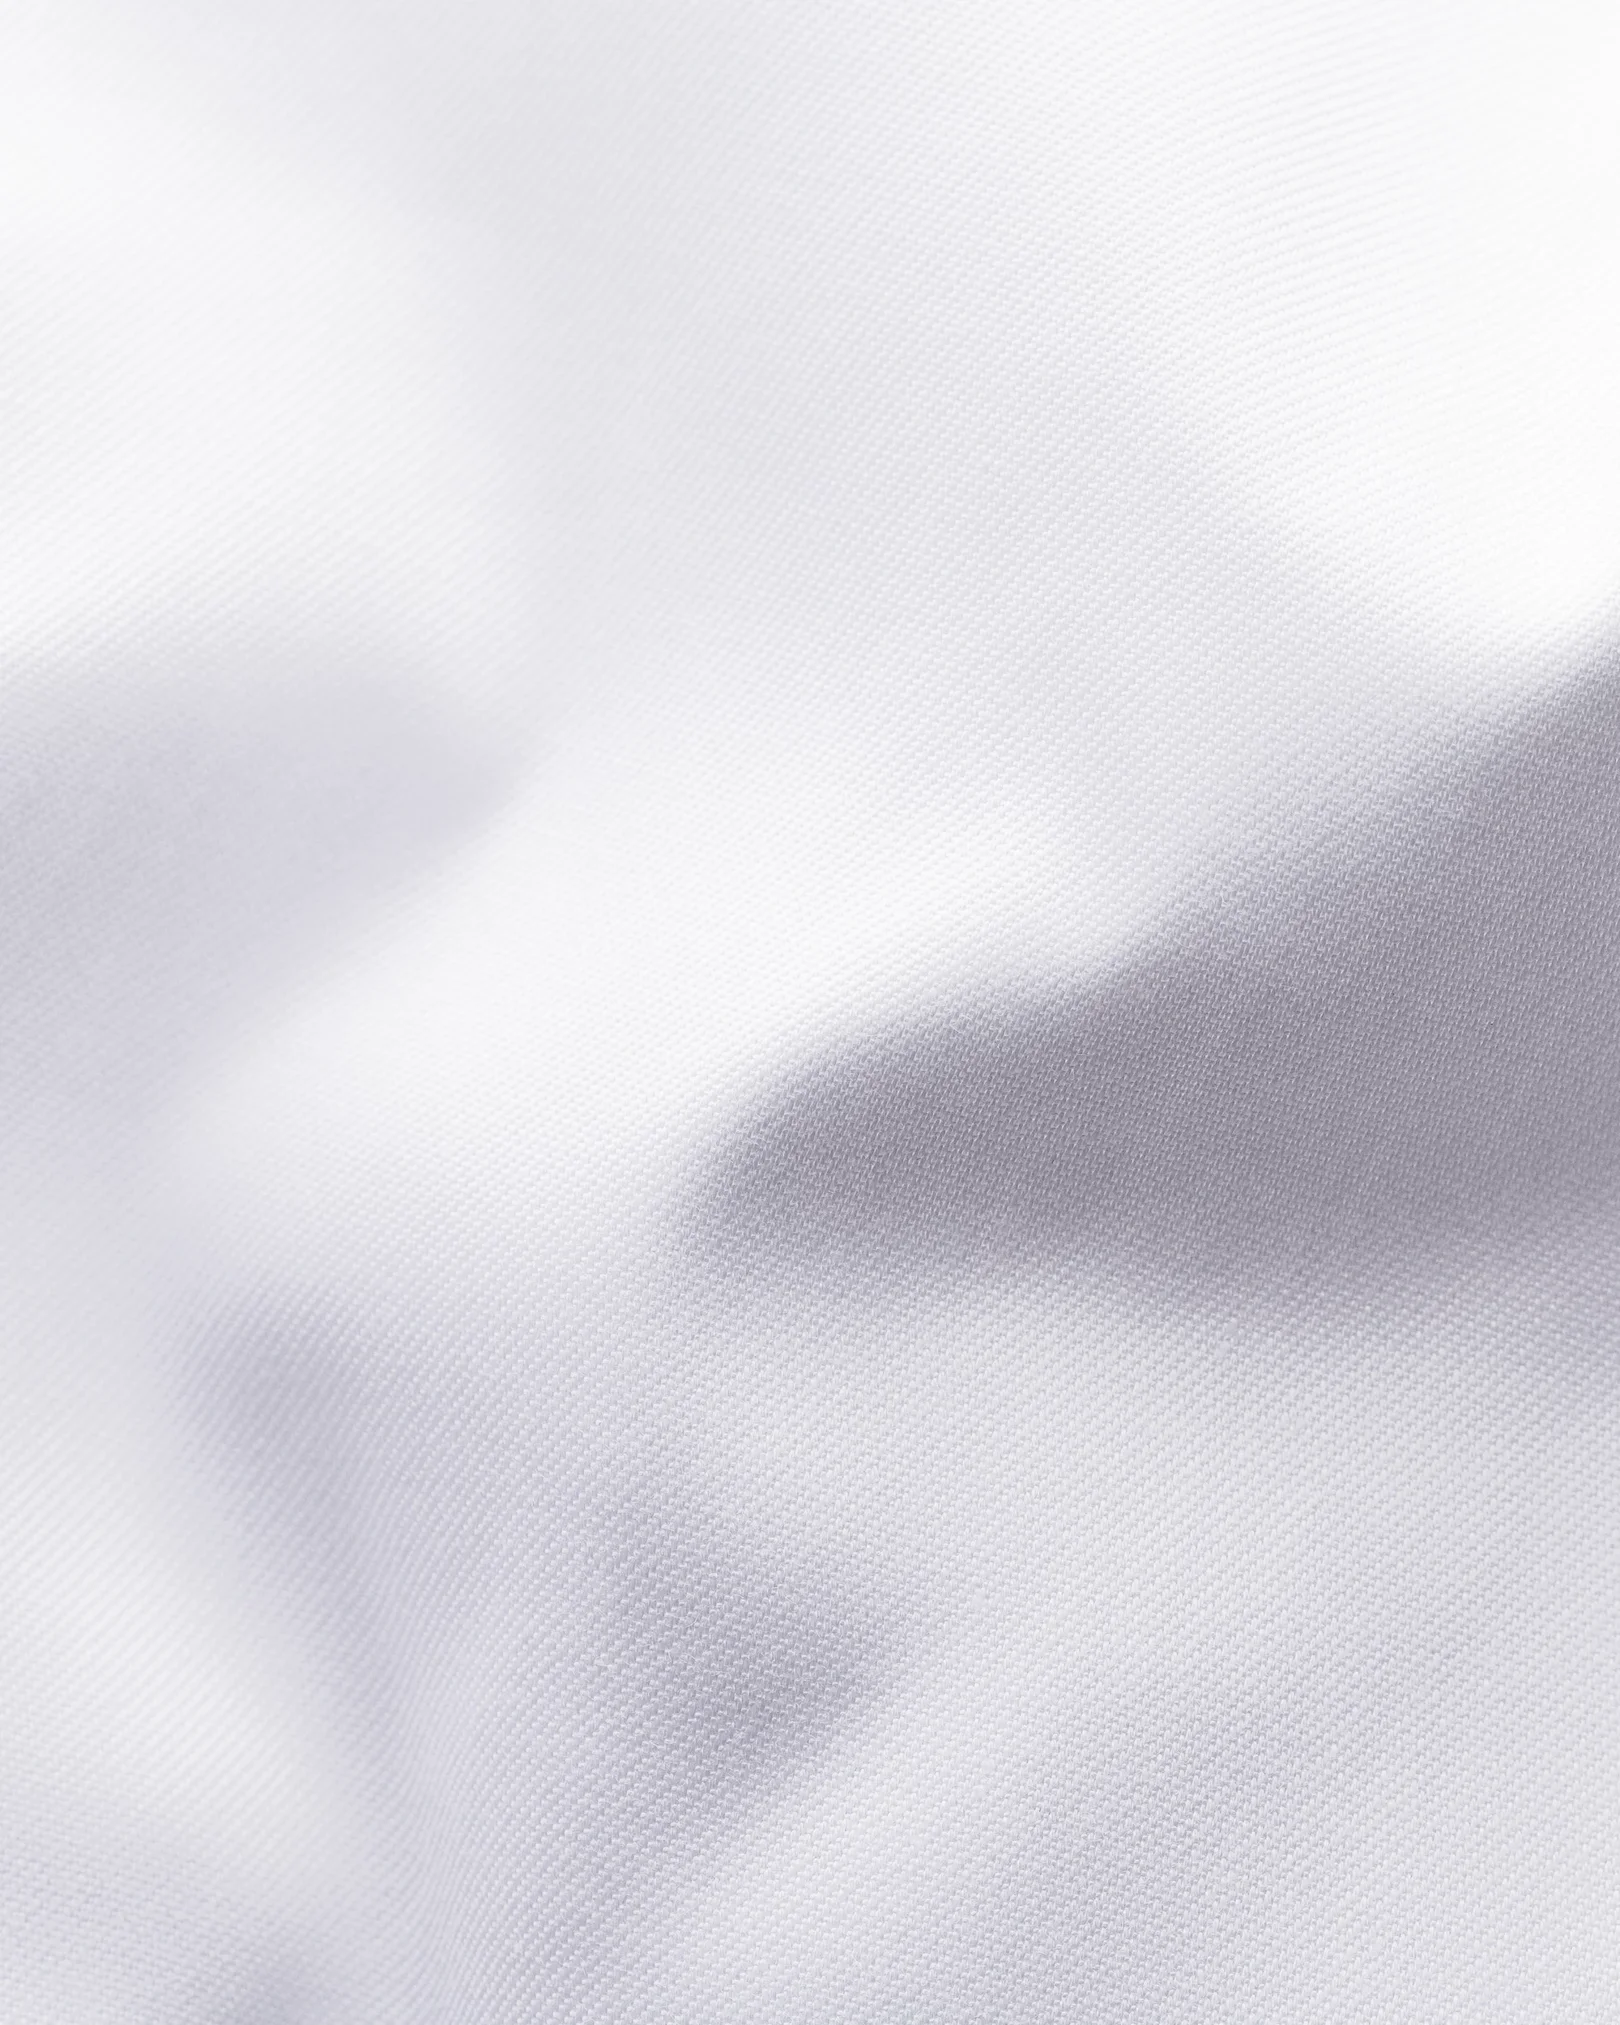 Eton - white signature twill shirt printed details cut away collar